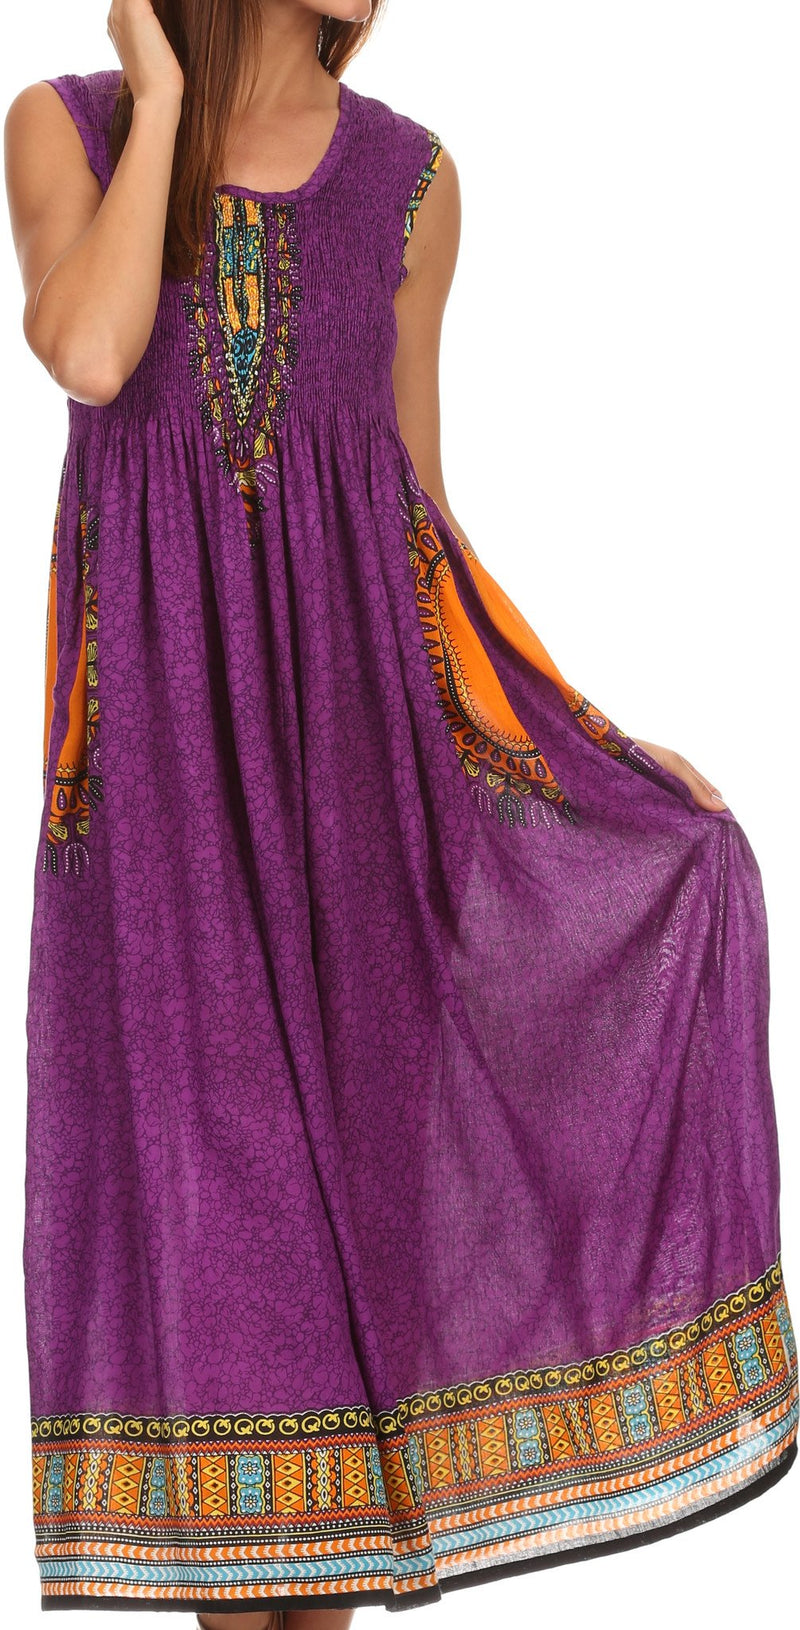 Sakkas Hoola Long Tall Full Length Tribal Printed Batik Tank Top Sleeveless Dress